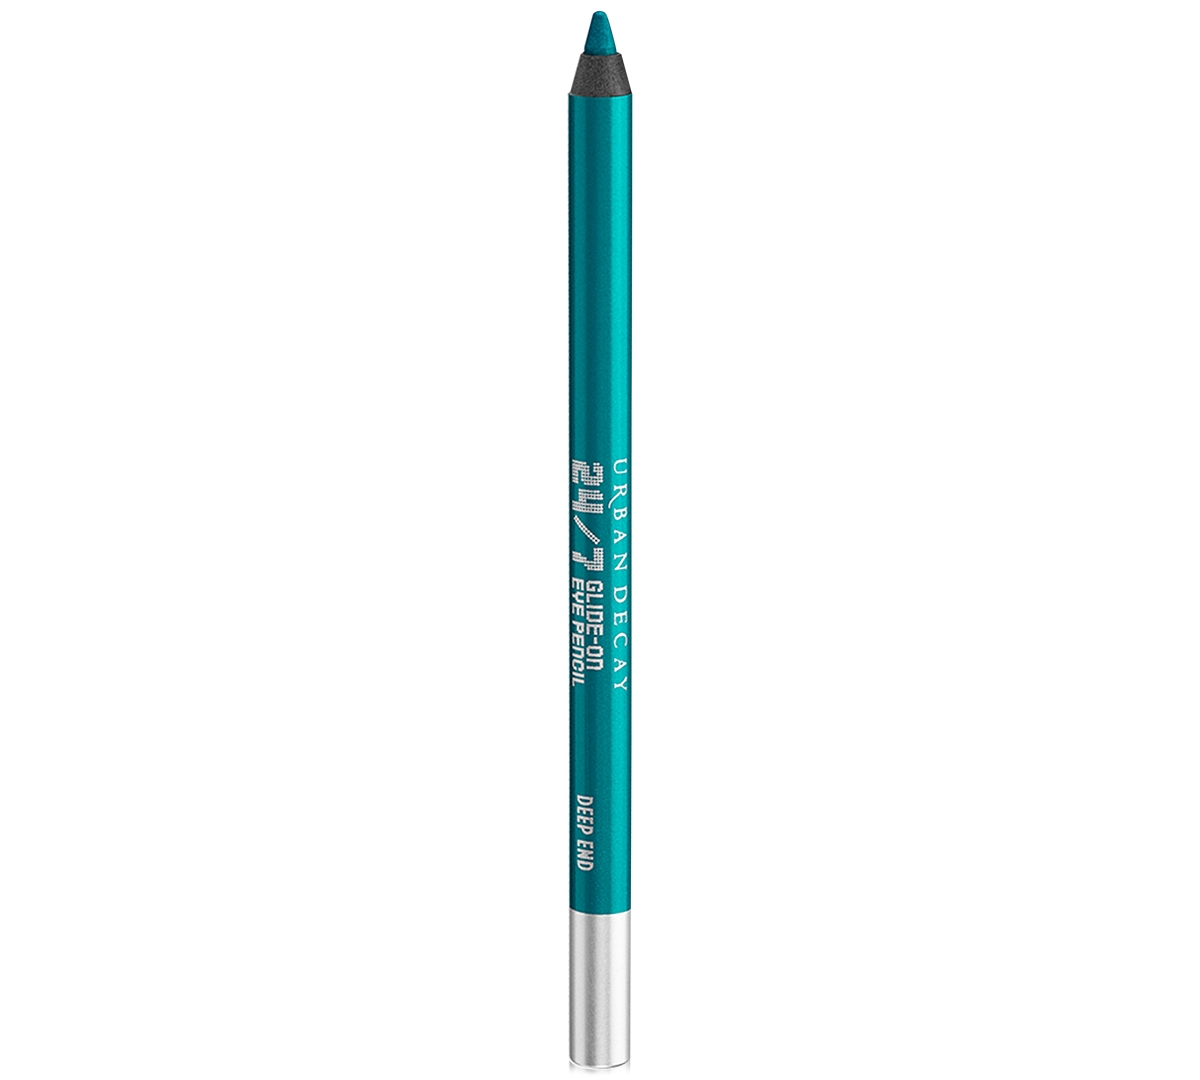 Urban Decay 24/7 Glide-on Waterproof Eyeliner Pencil In Deep End (bright Metallic Teal Shimmer)